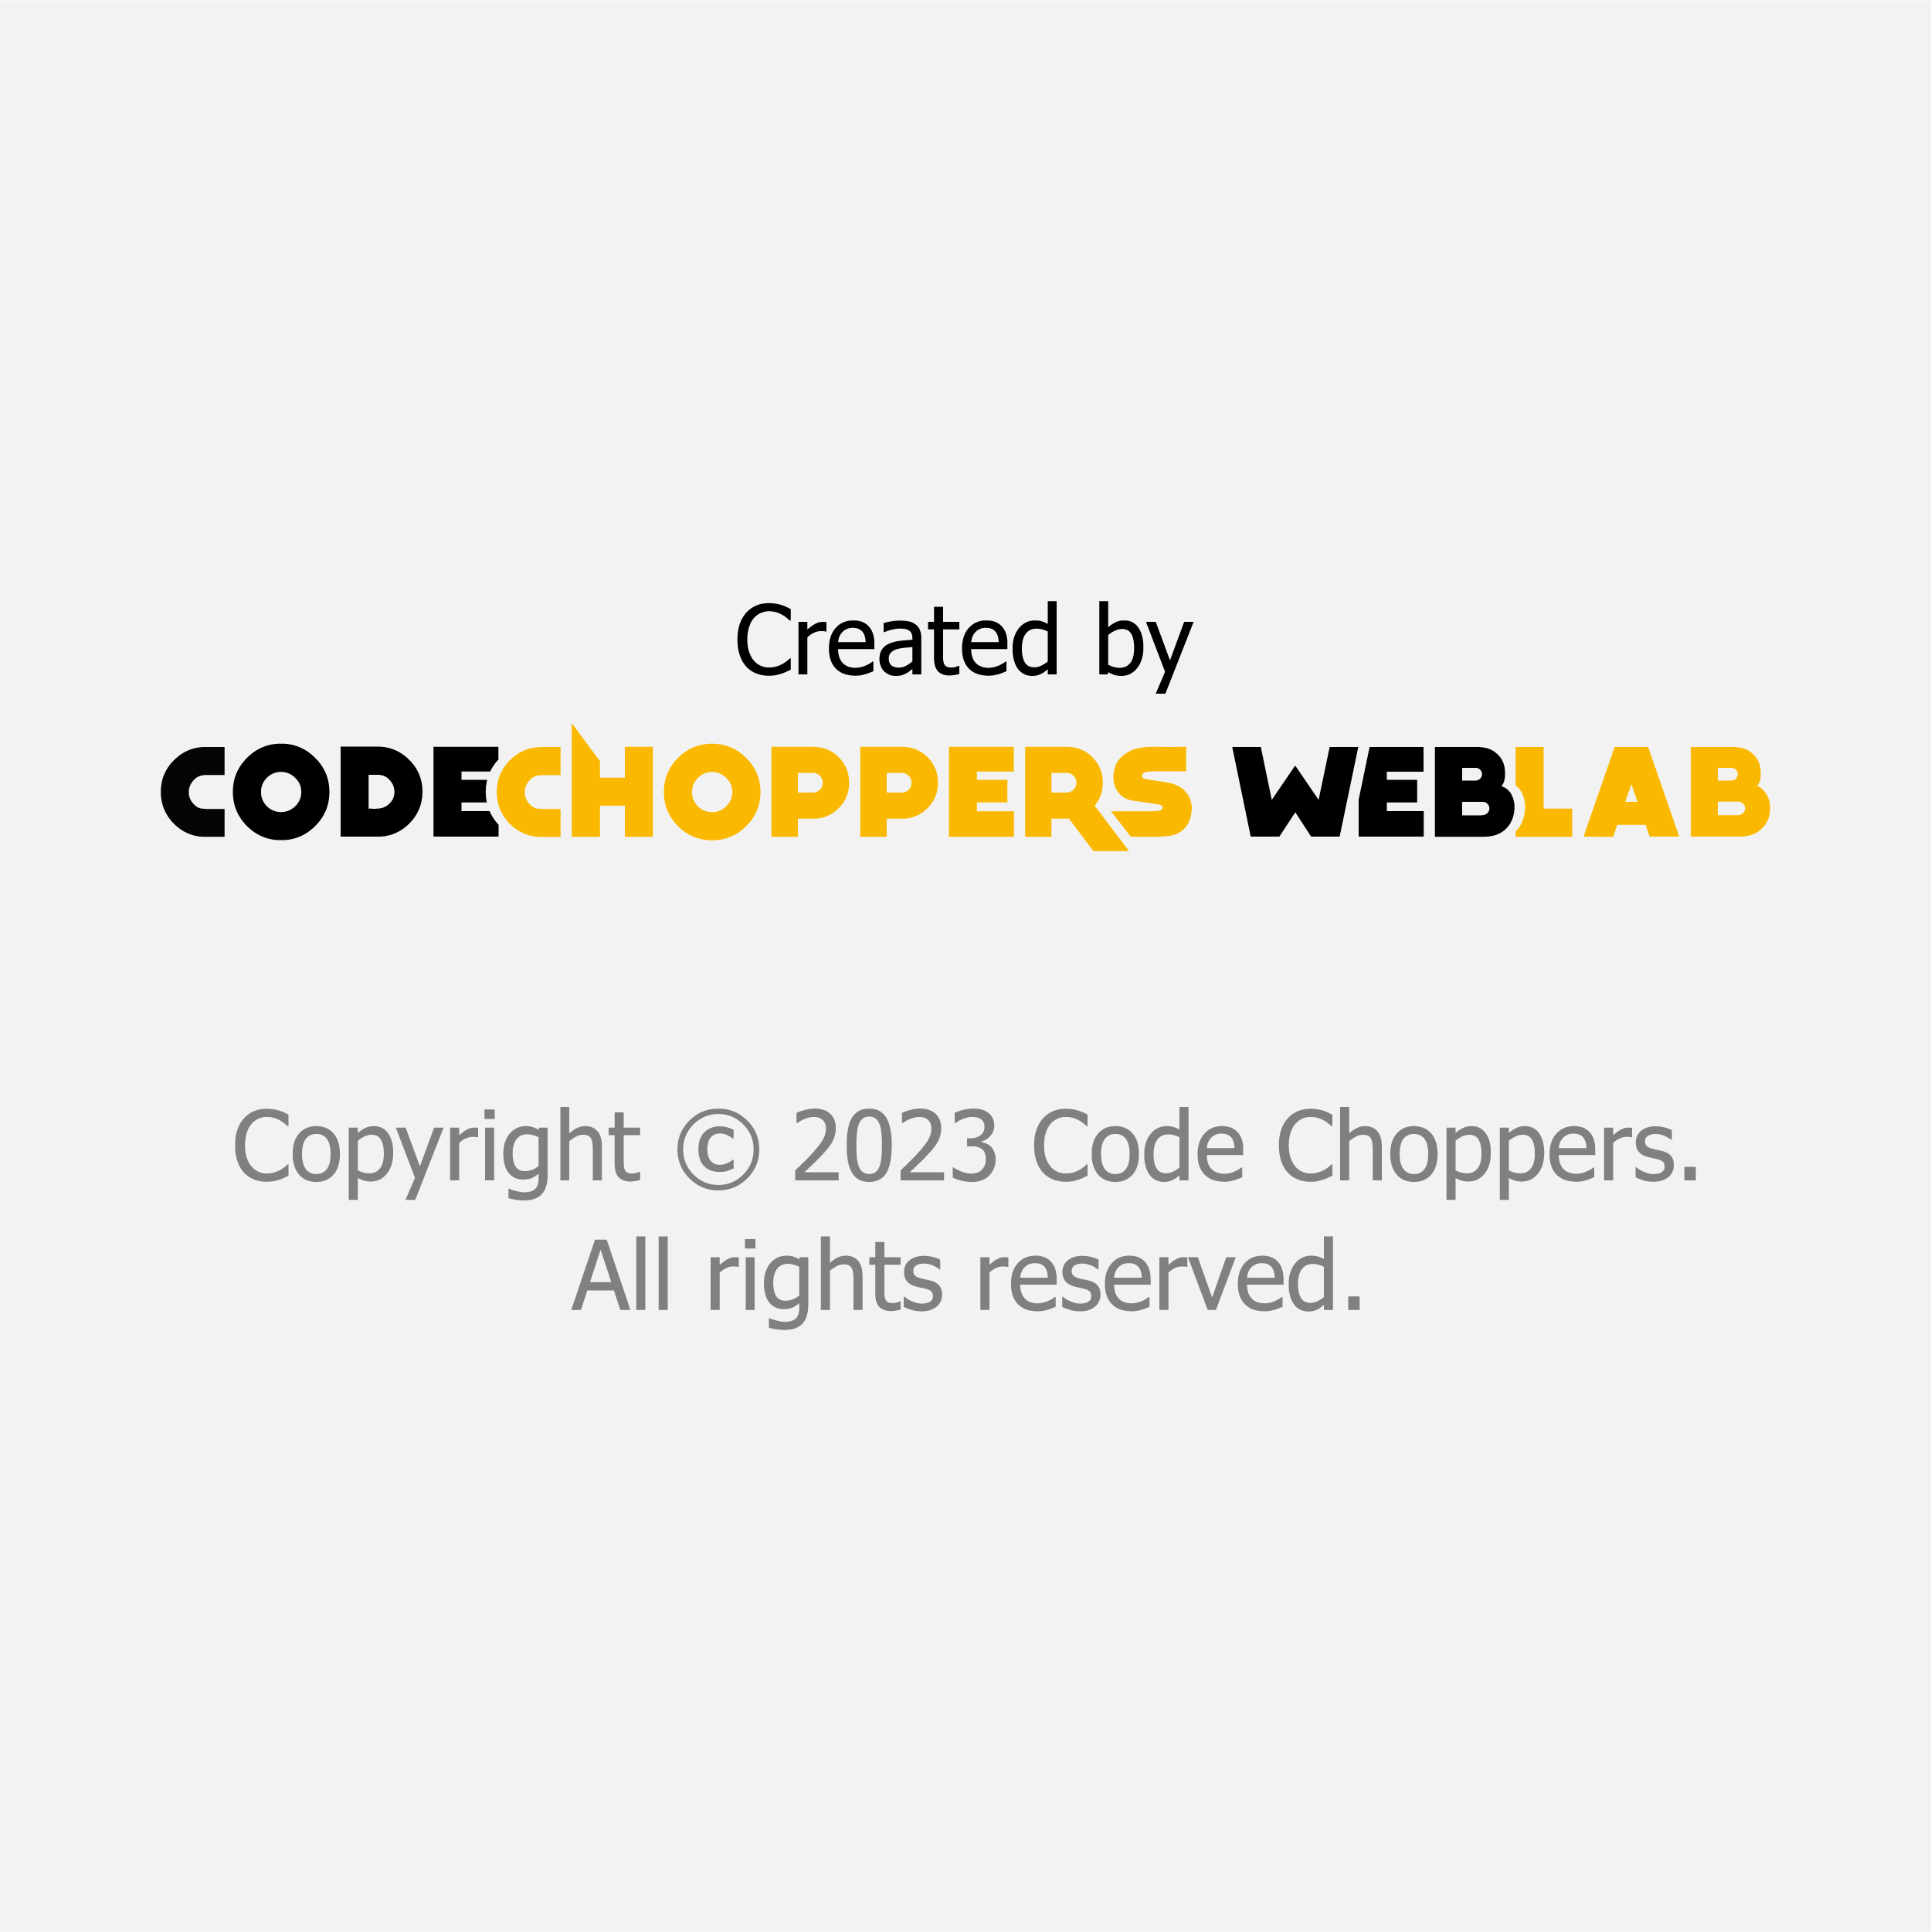 Web site developer and copyright